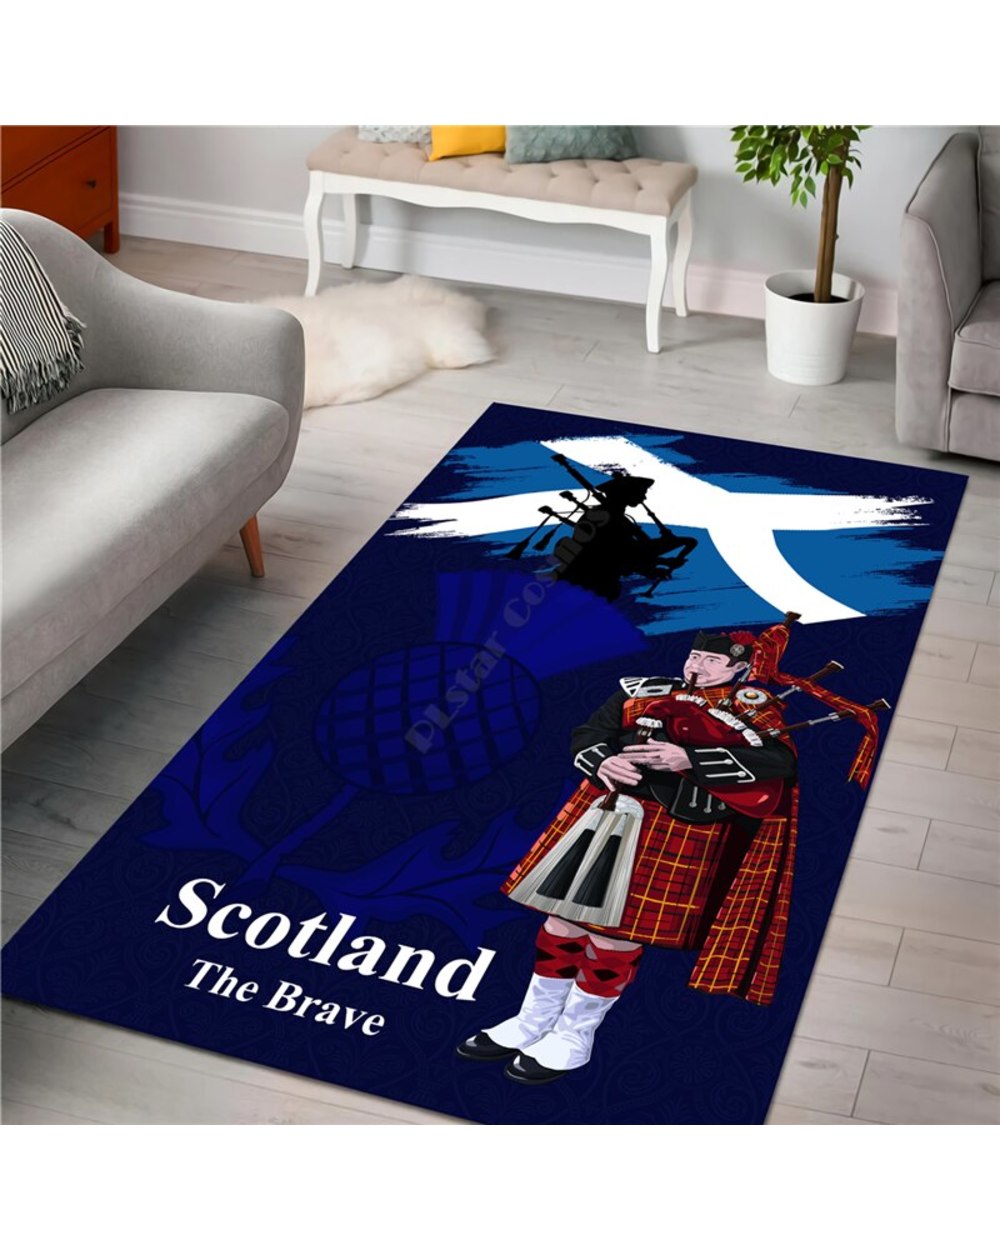 Scotland the brave man rug 6